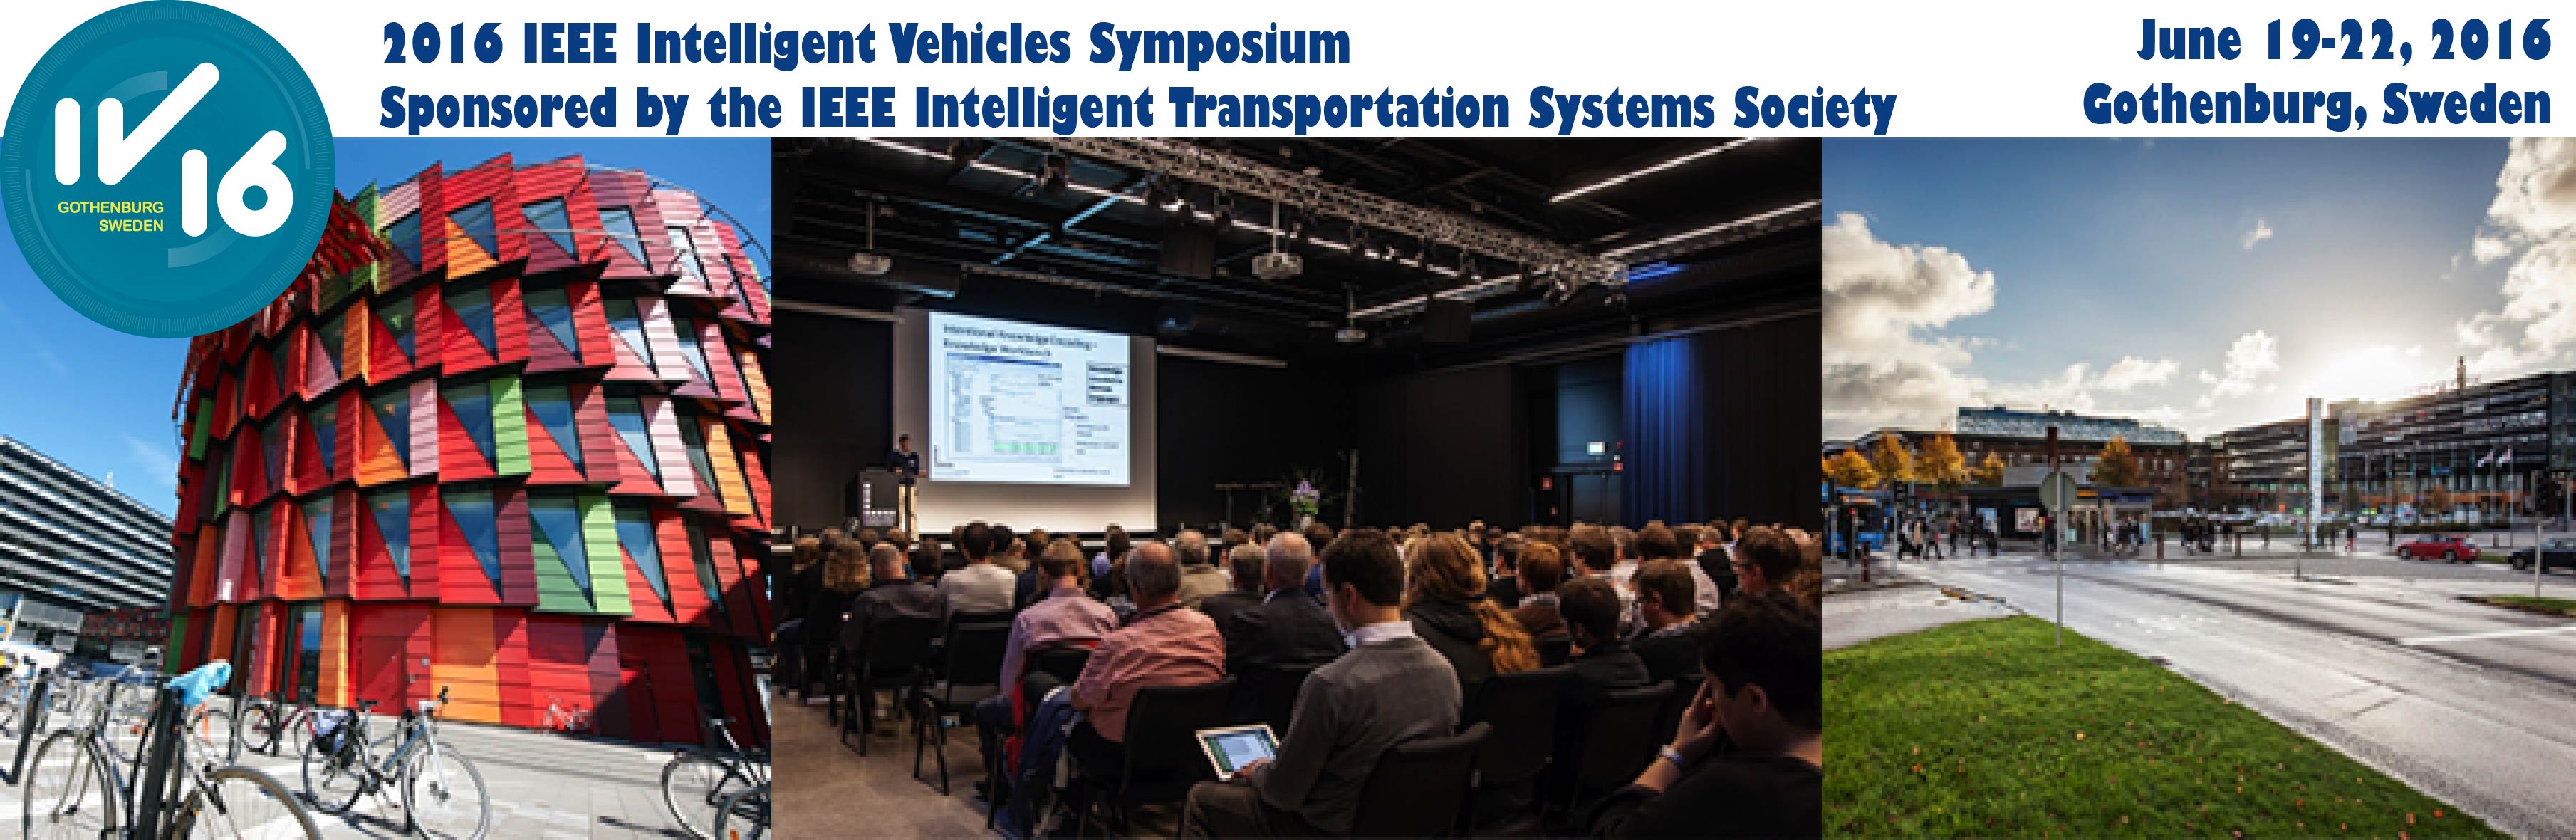 2016 IEEE Intelligent Vehicles Symposium